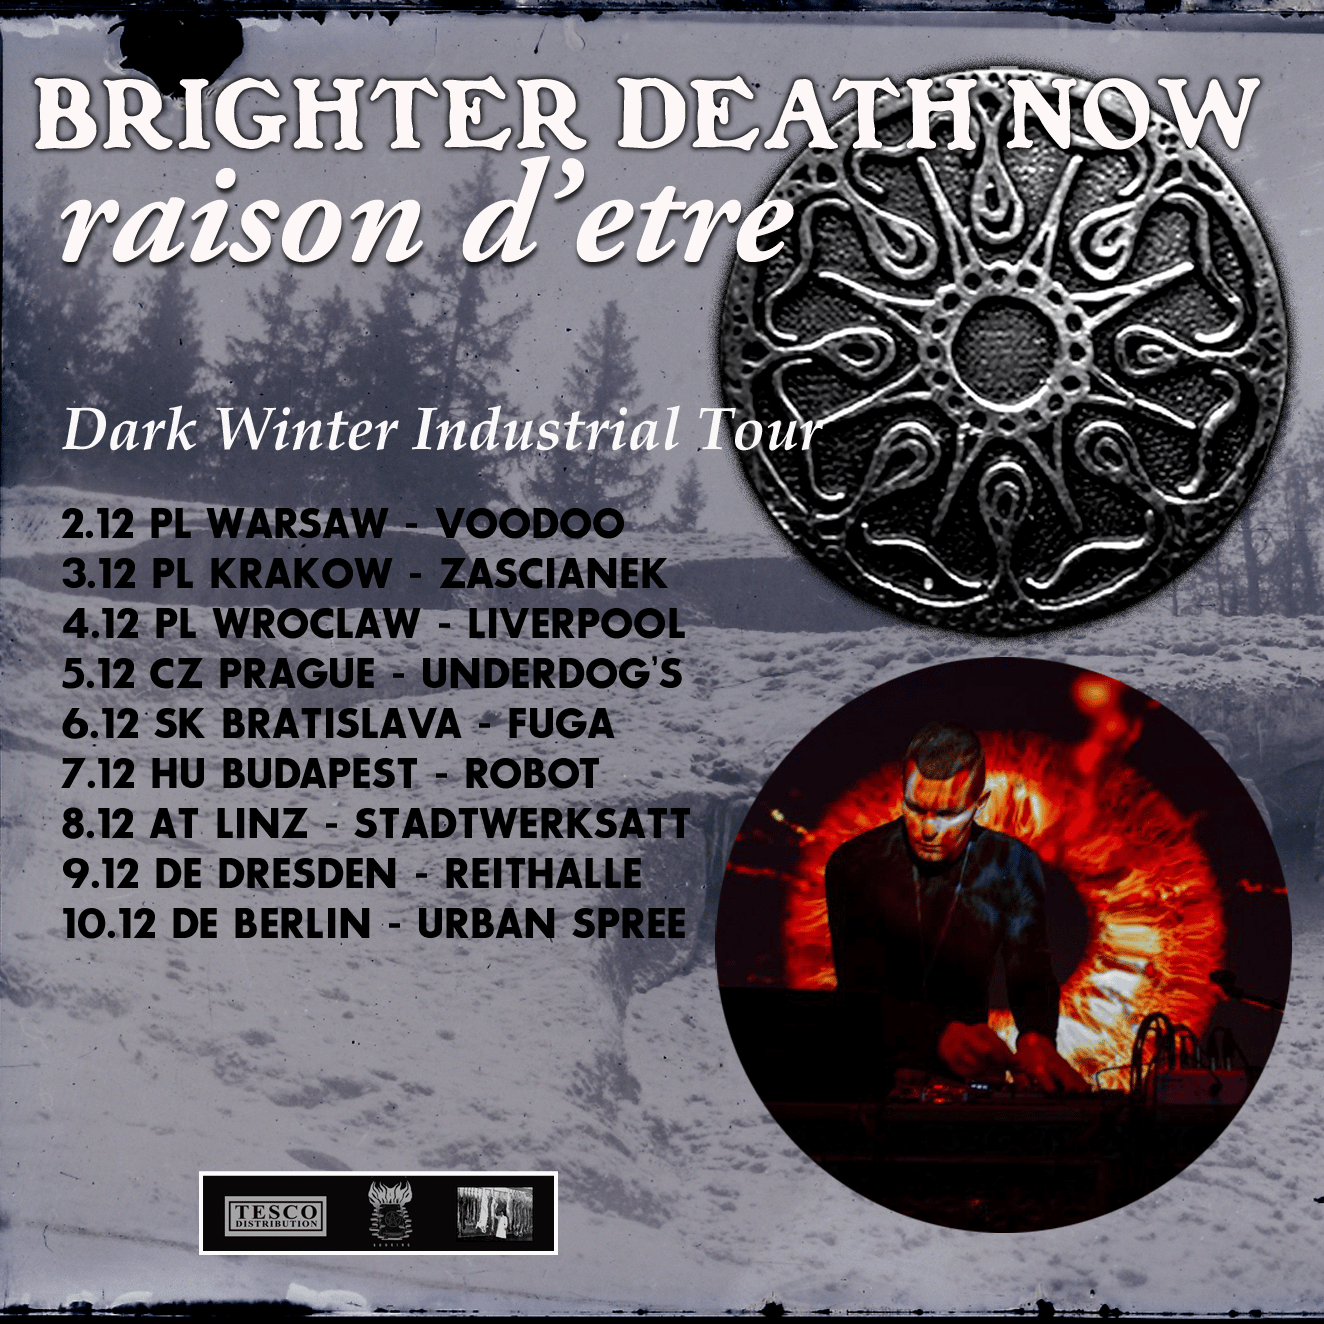 Dark Winter Industrial tour with raison d'être and Brighter Death Now.